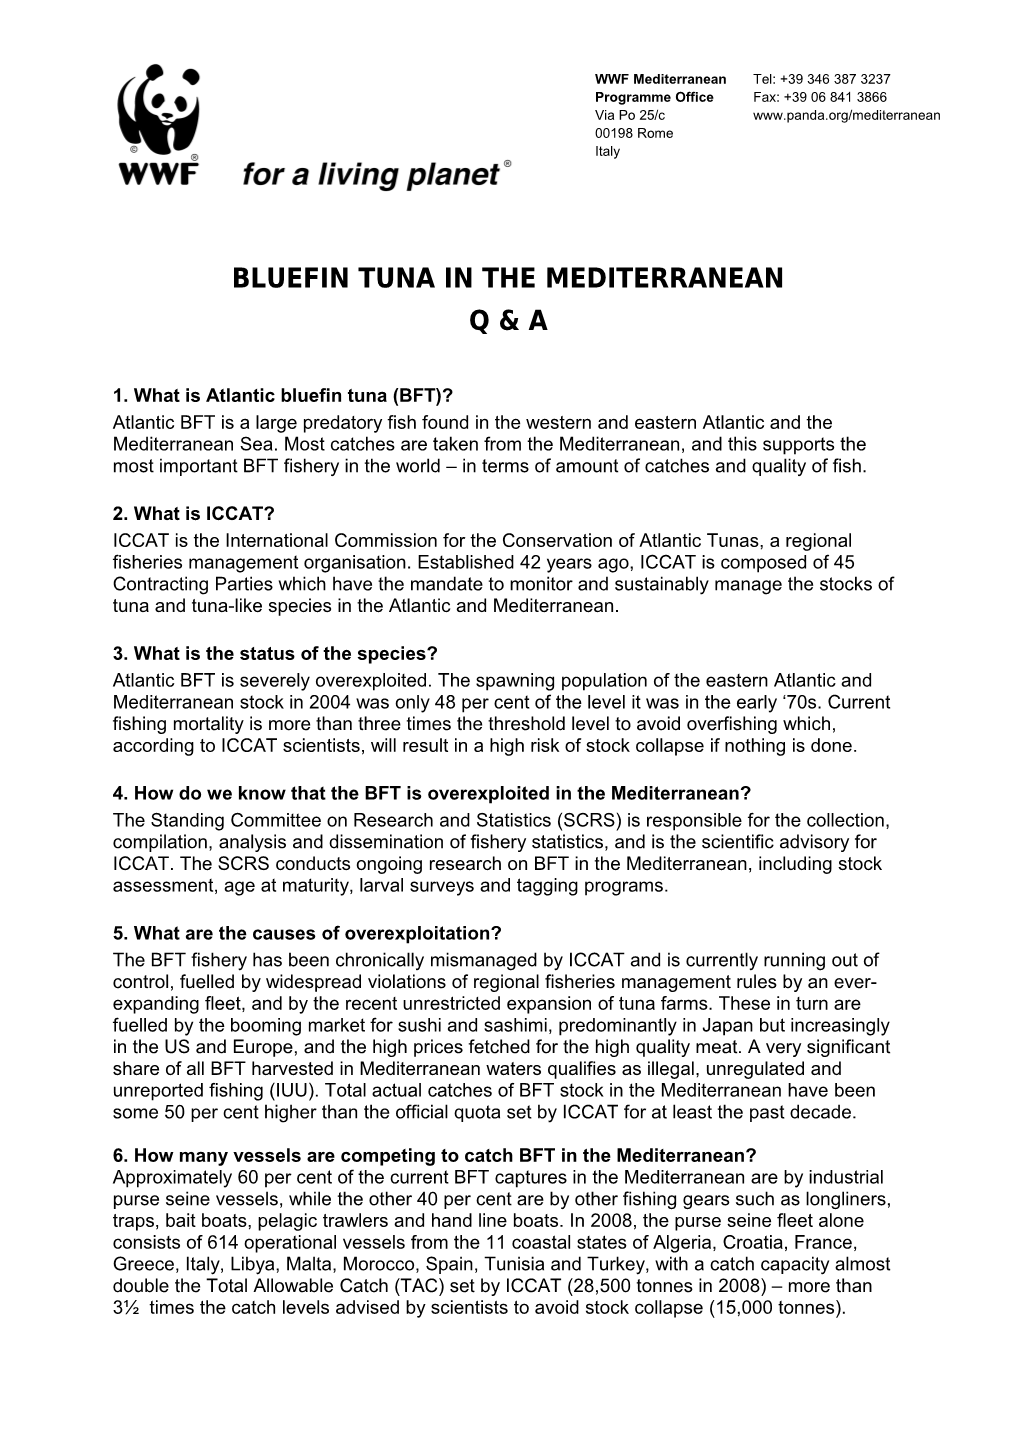 Bluefin Tuna in the Mediterranean